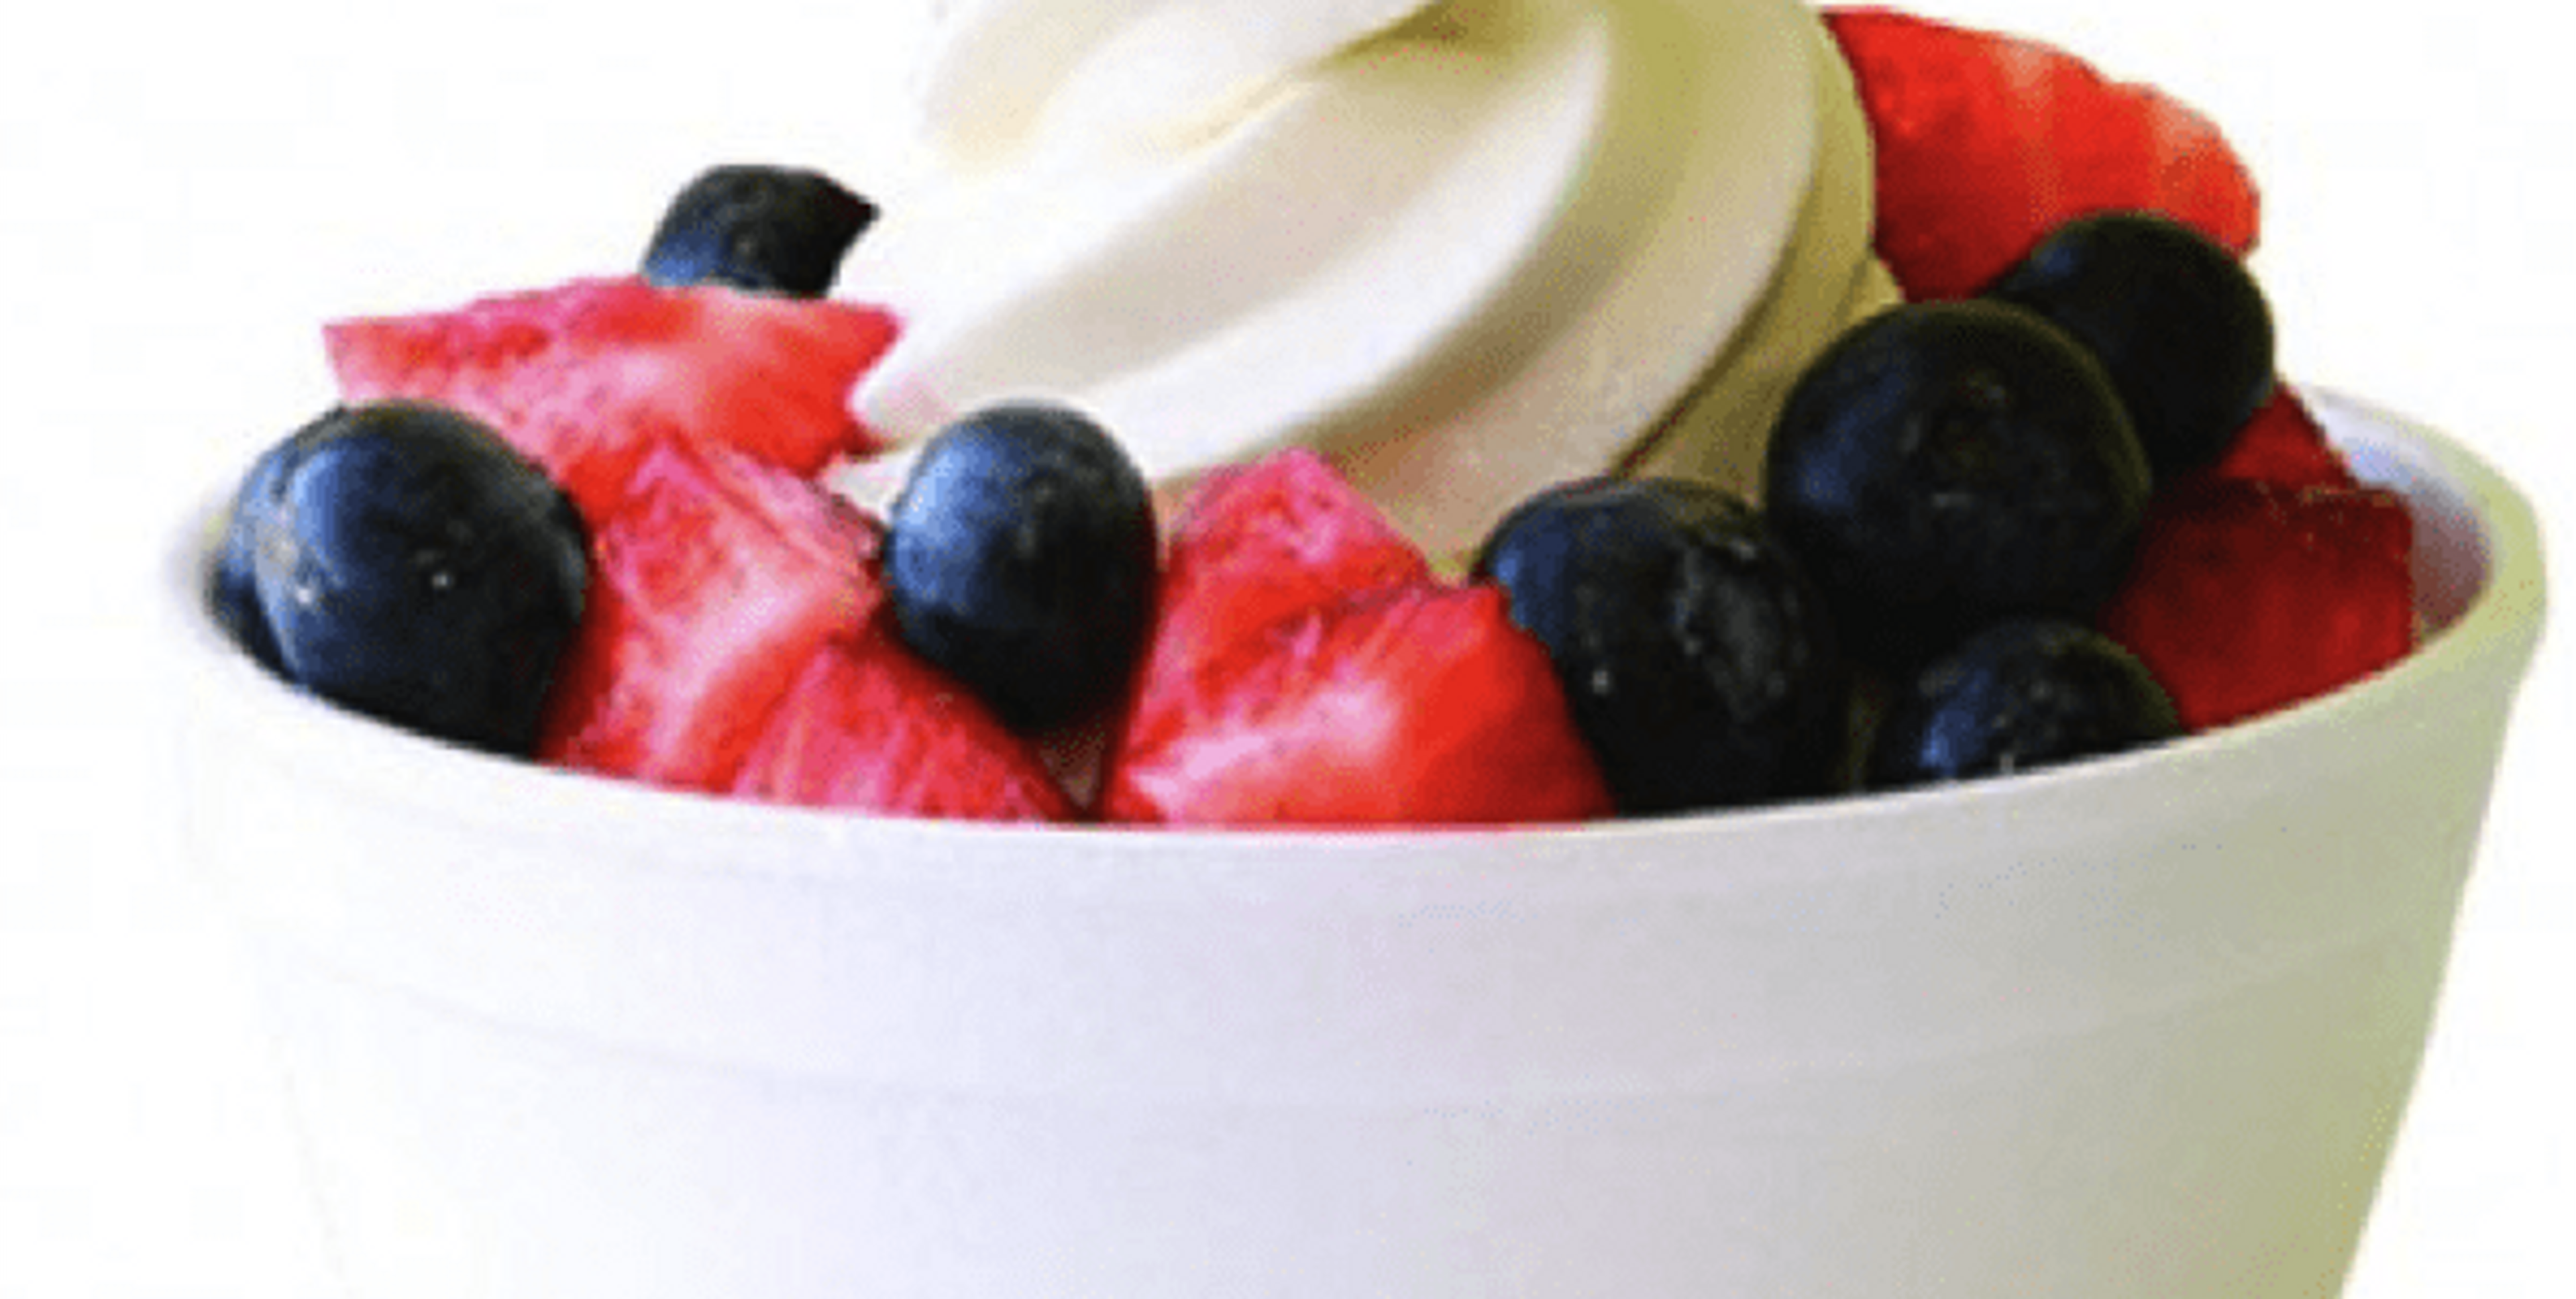 Guilt free frozen yogurt